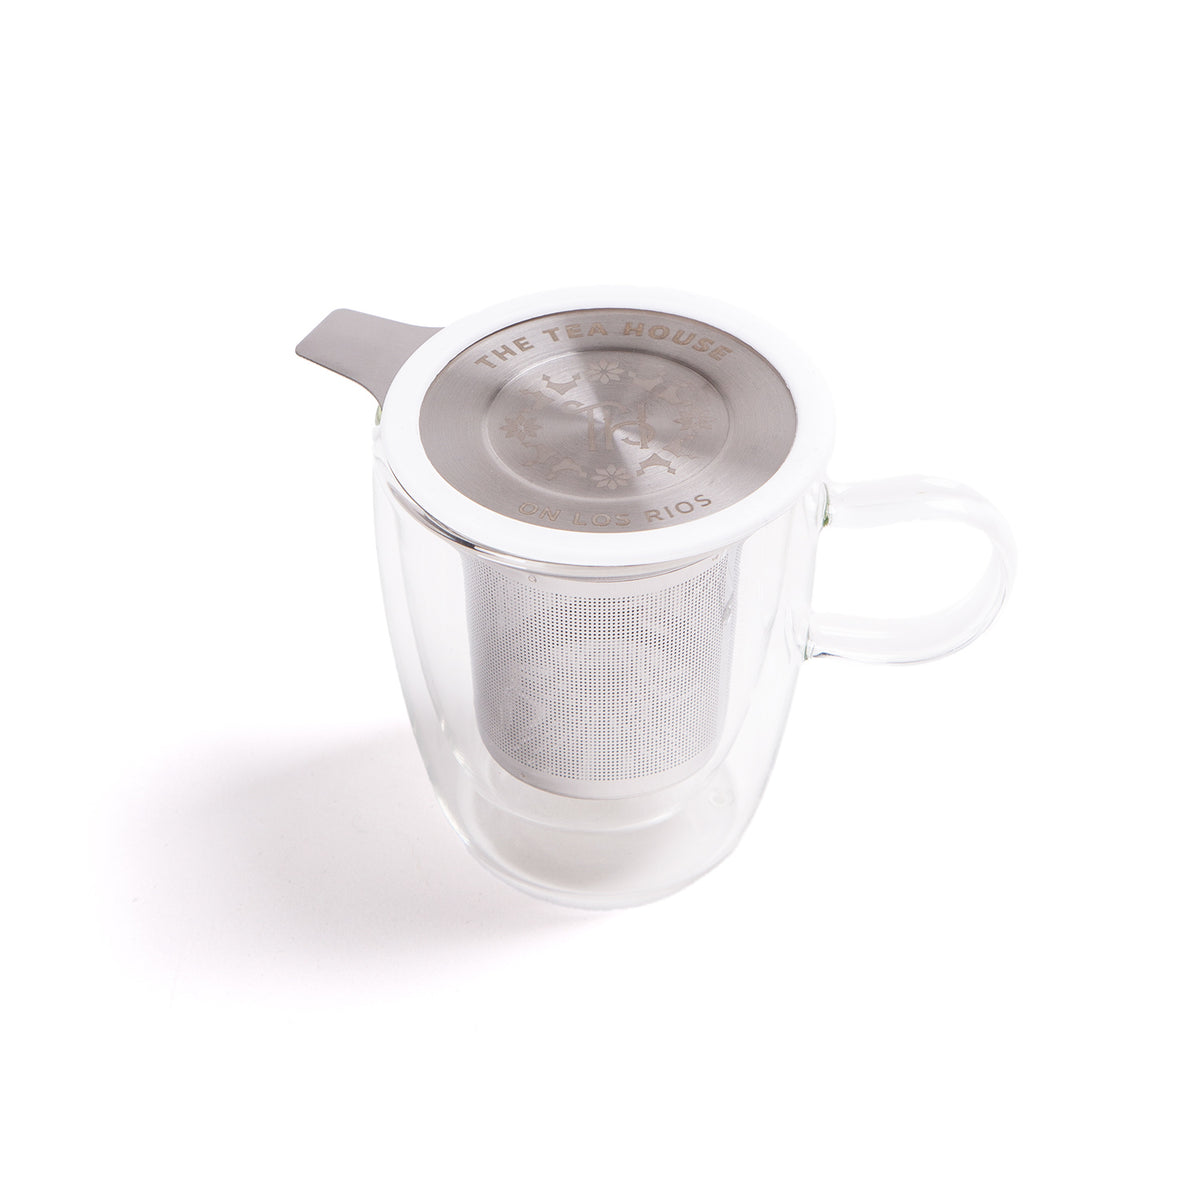 The Tea House on Los Rios Tea Infuser Inside Small Tea Cup / Mug